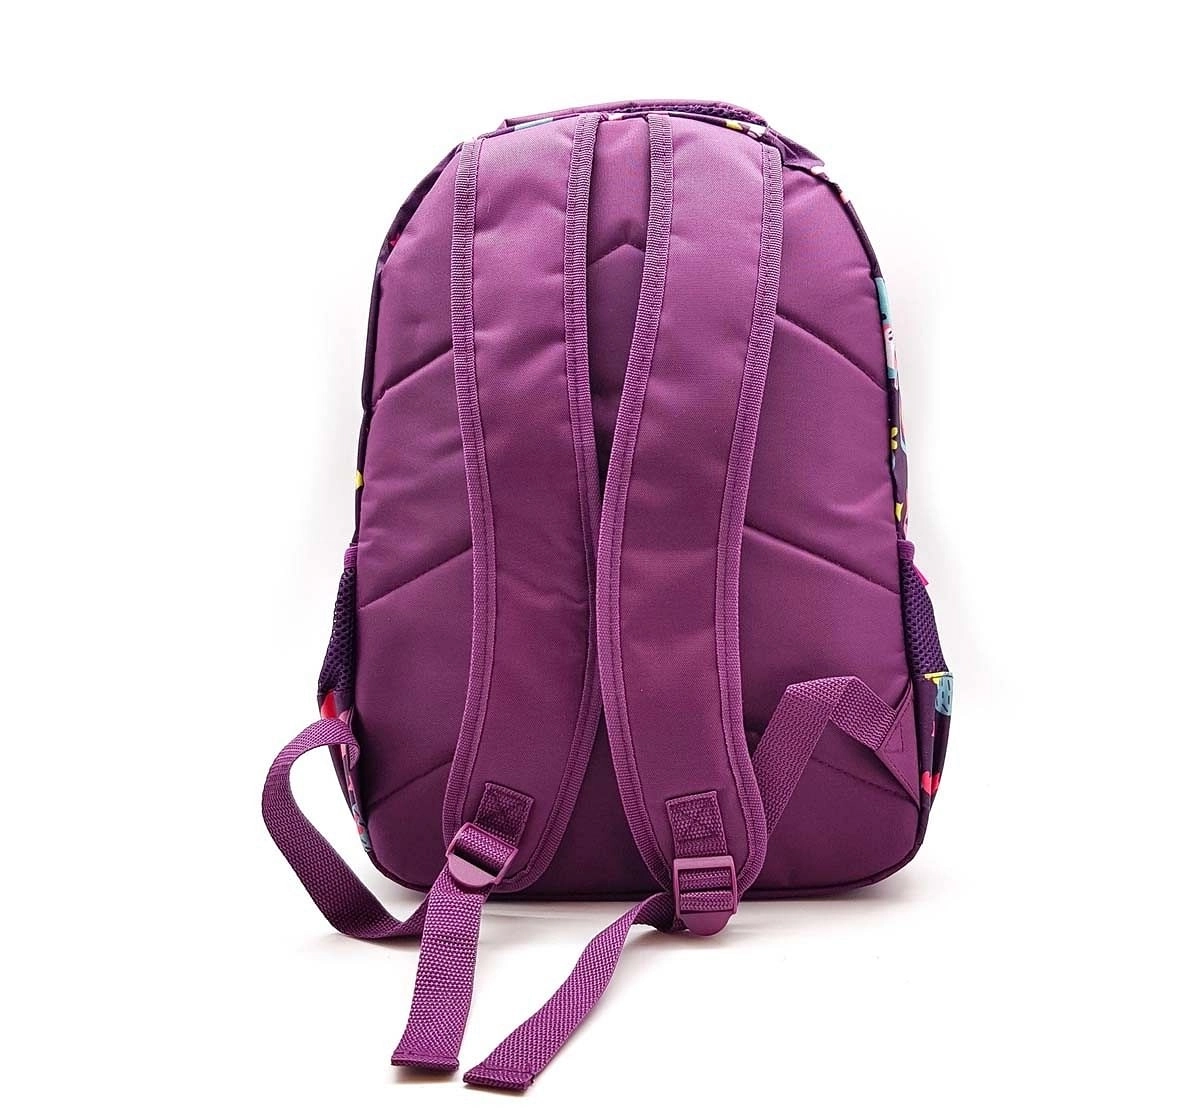 Hamster London Llama Backpack Travel for Kids Age 3Y+ (Purple)